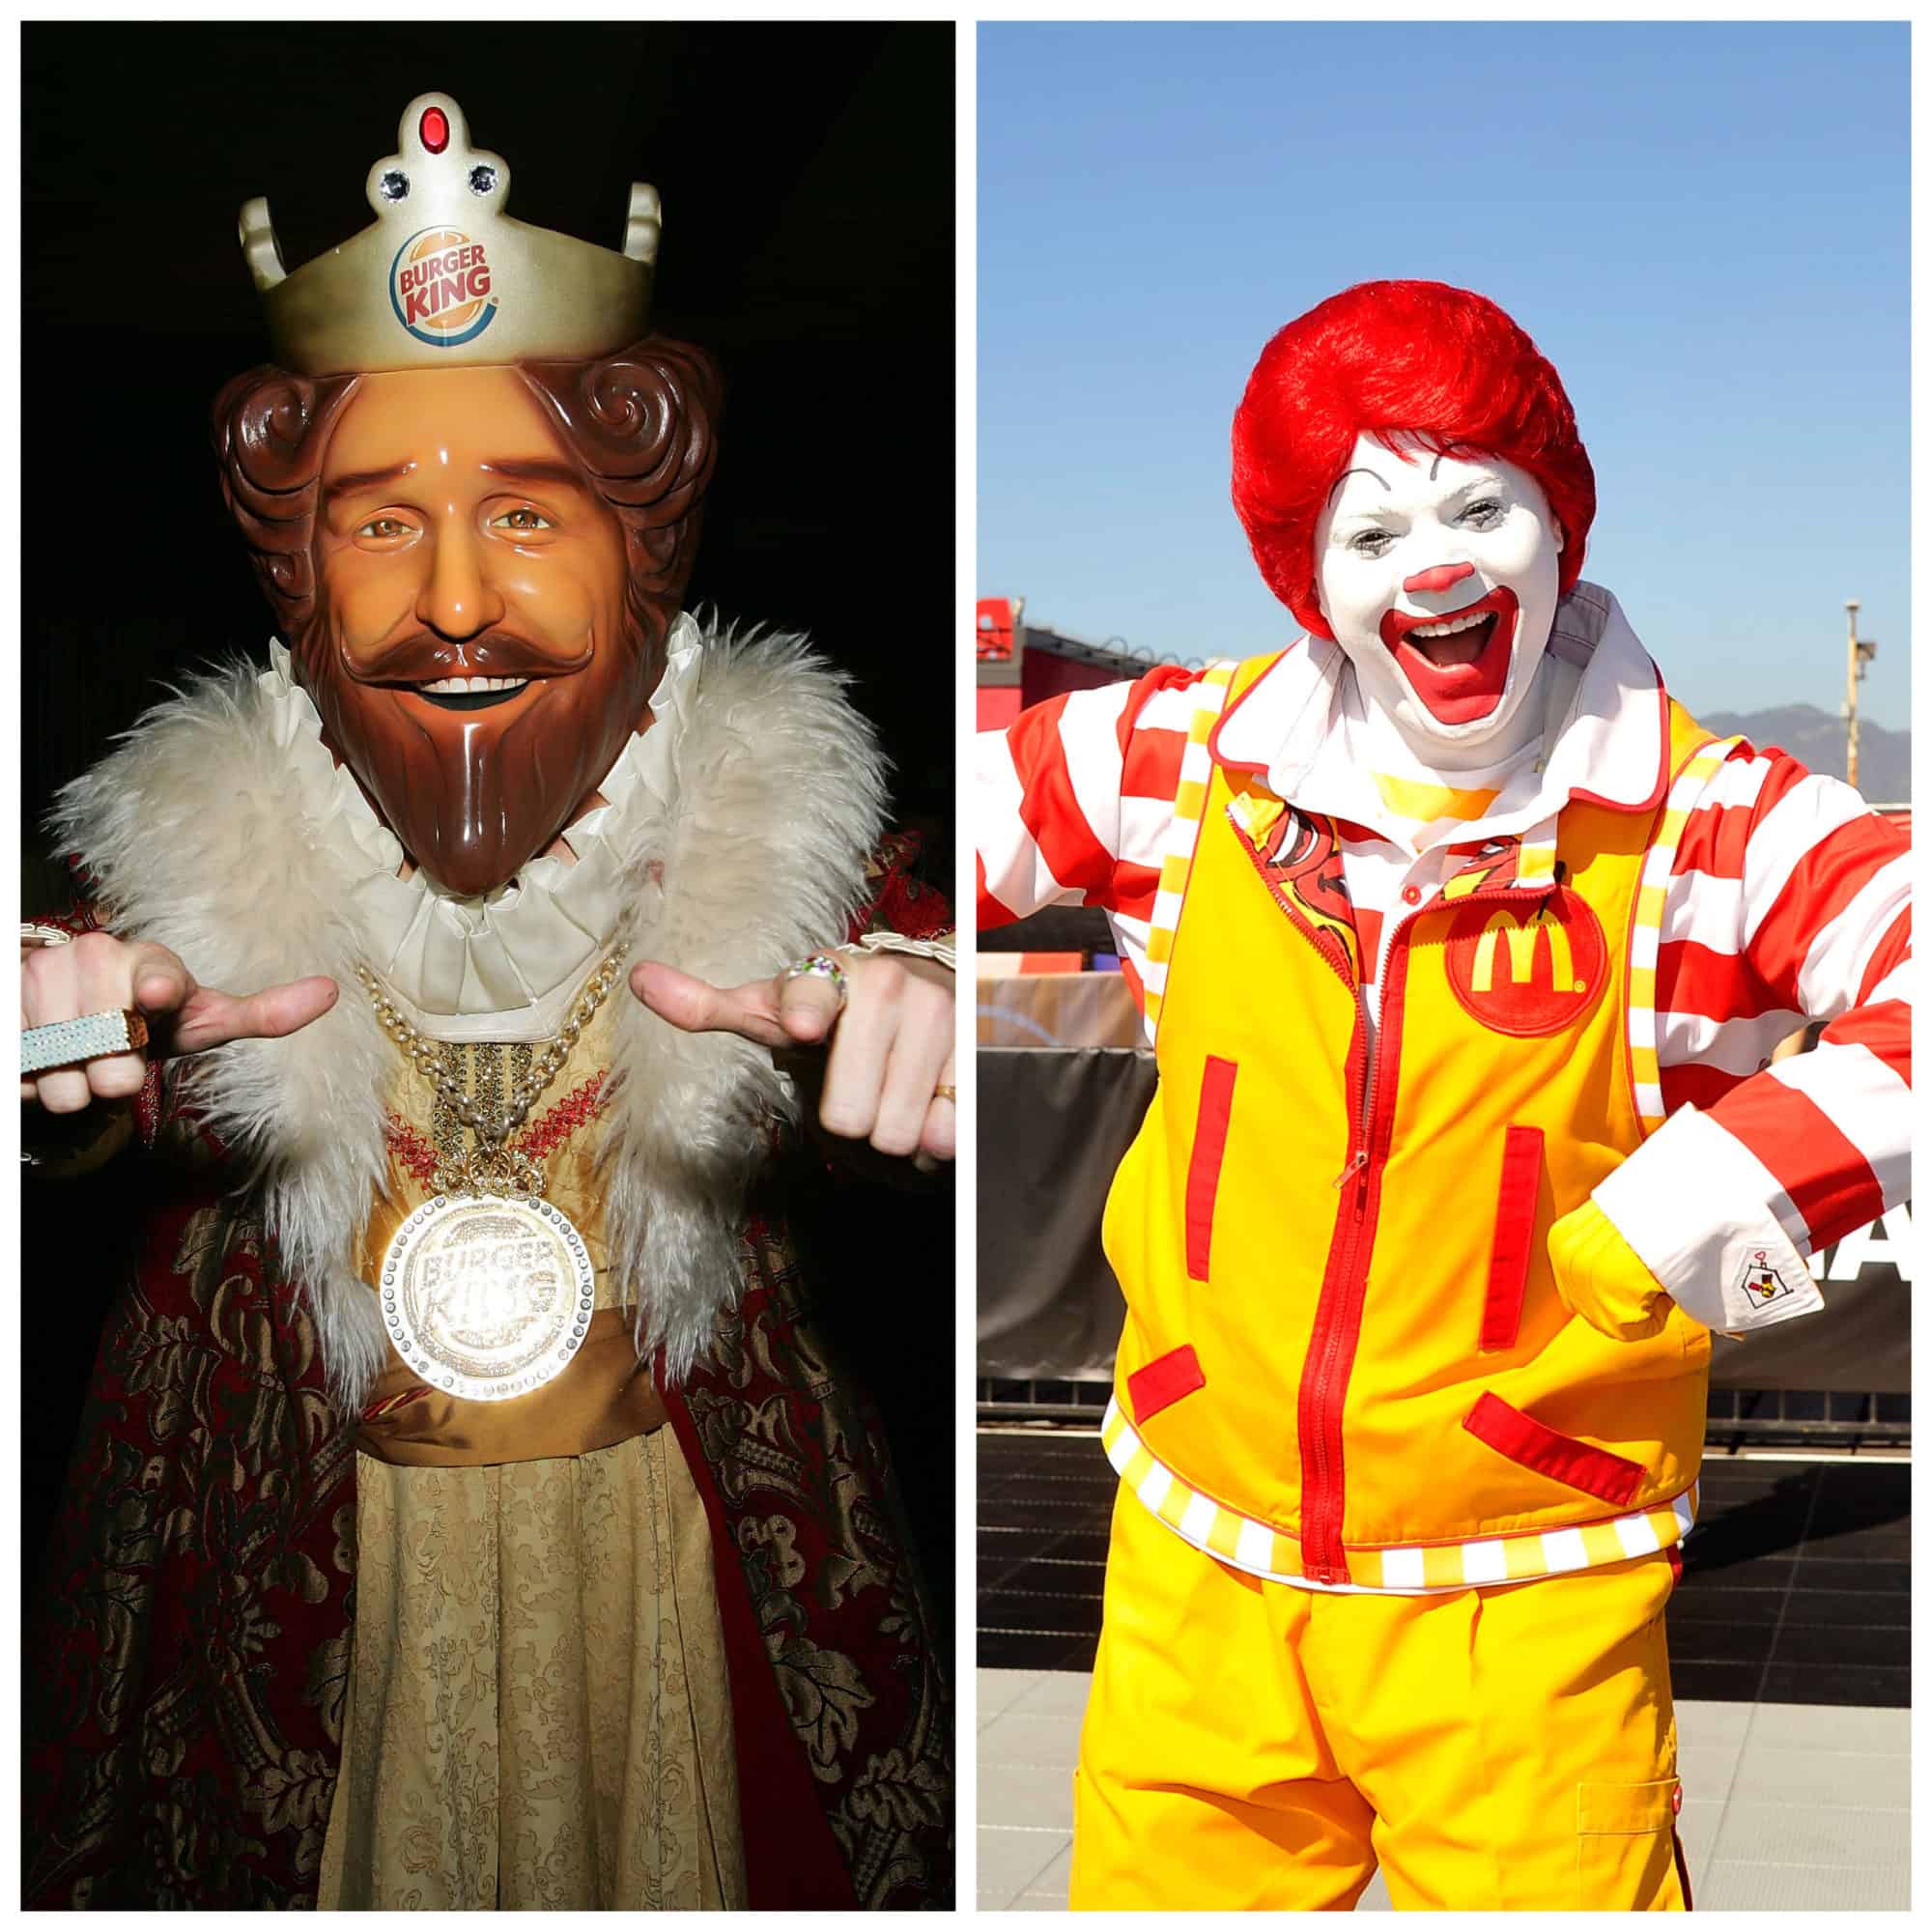 Ronald McDonald And Burger King Mascot Share A Kiss In 'Love Conquers ...